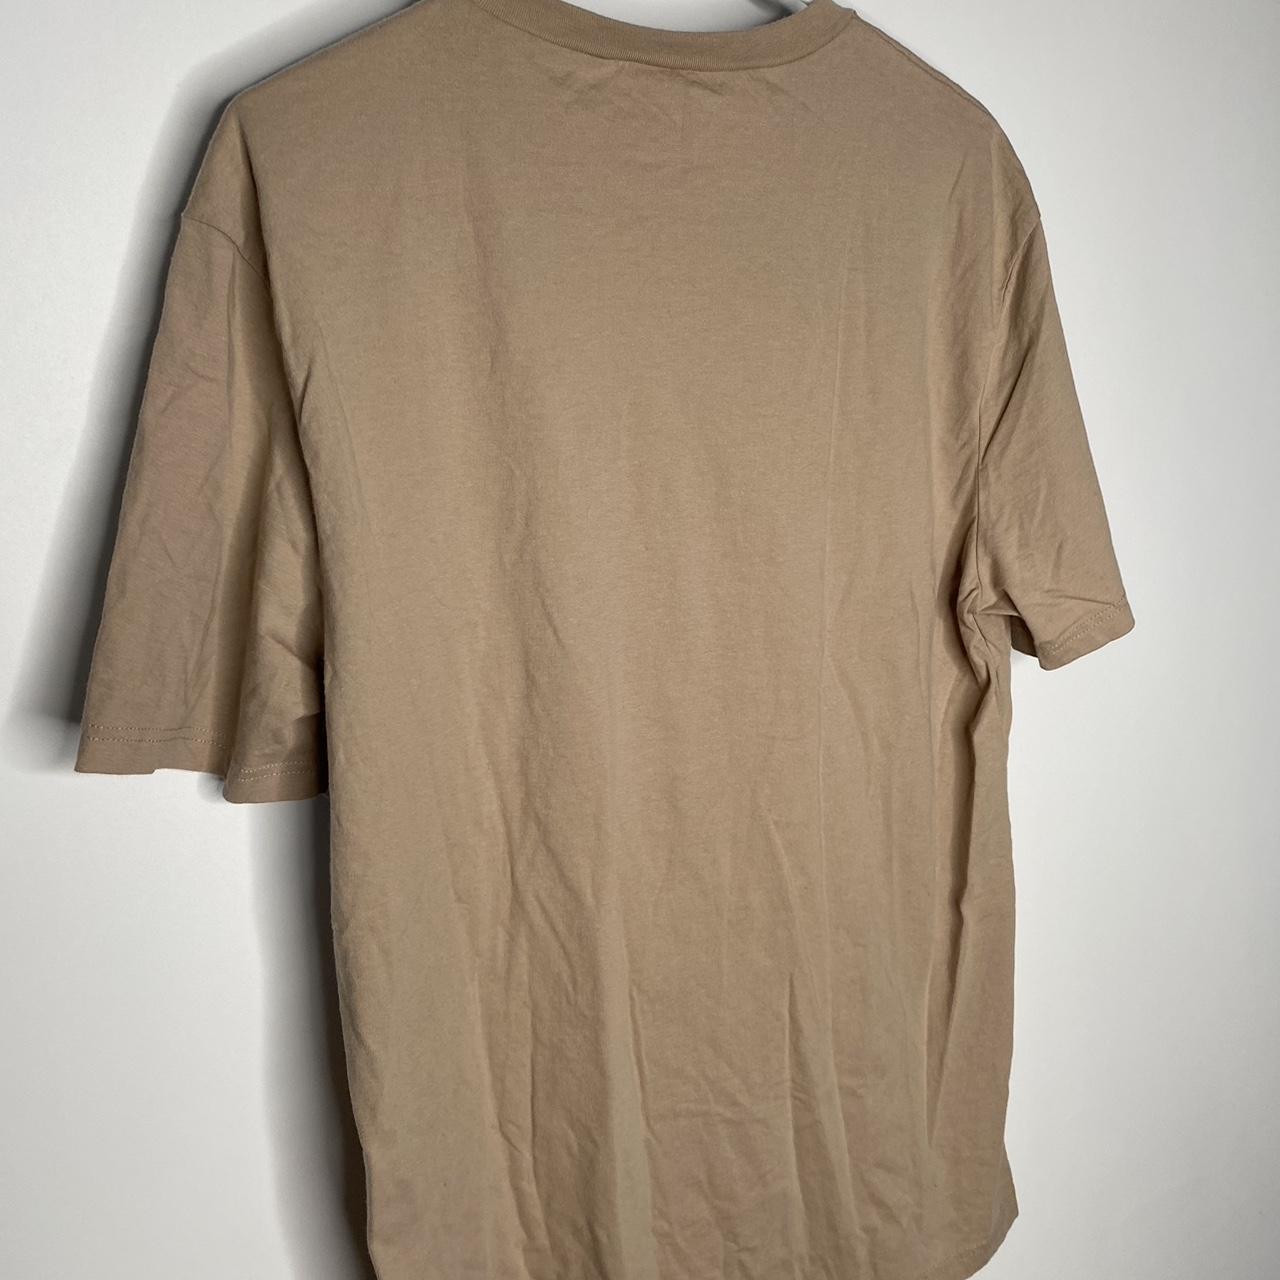 River Island Men's Tan T-shirt (4)